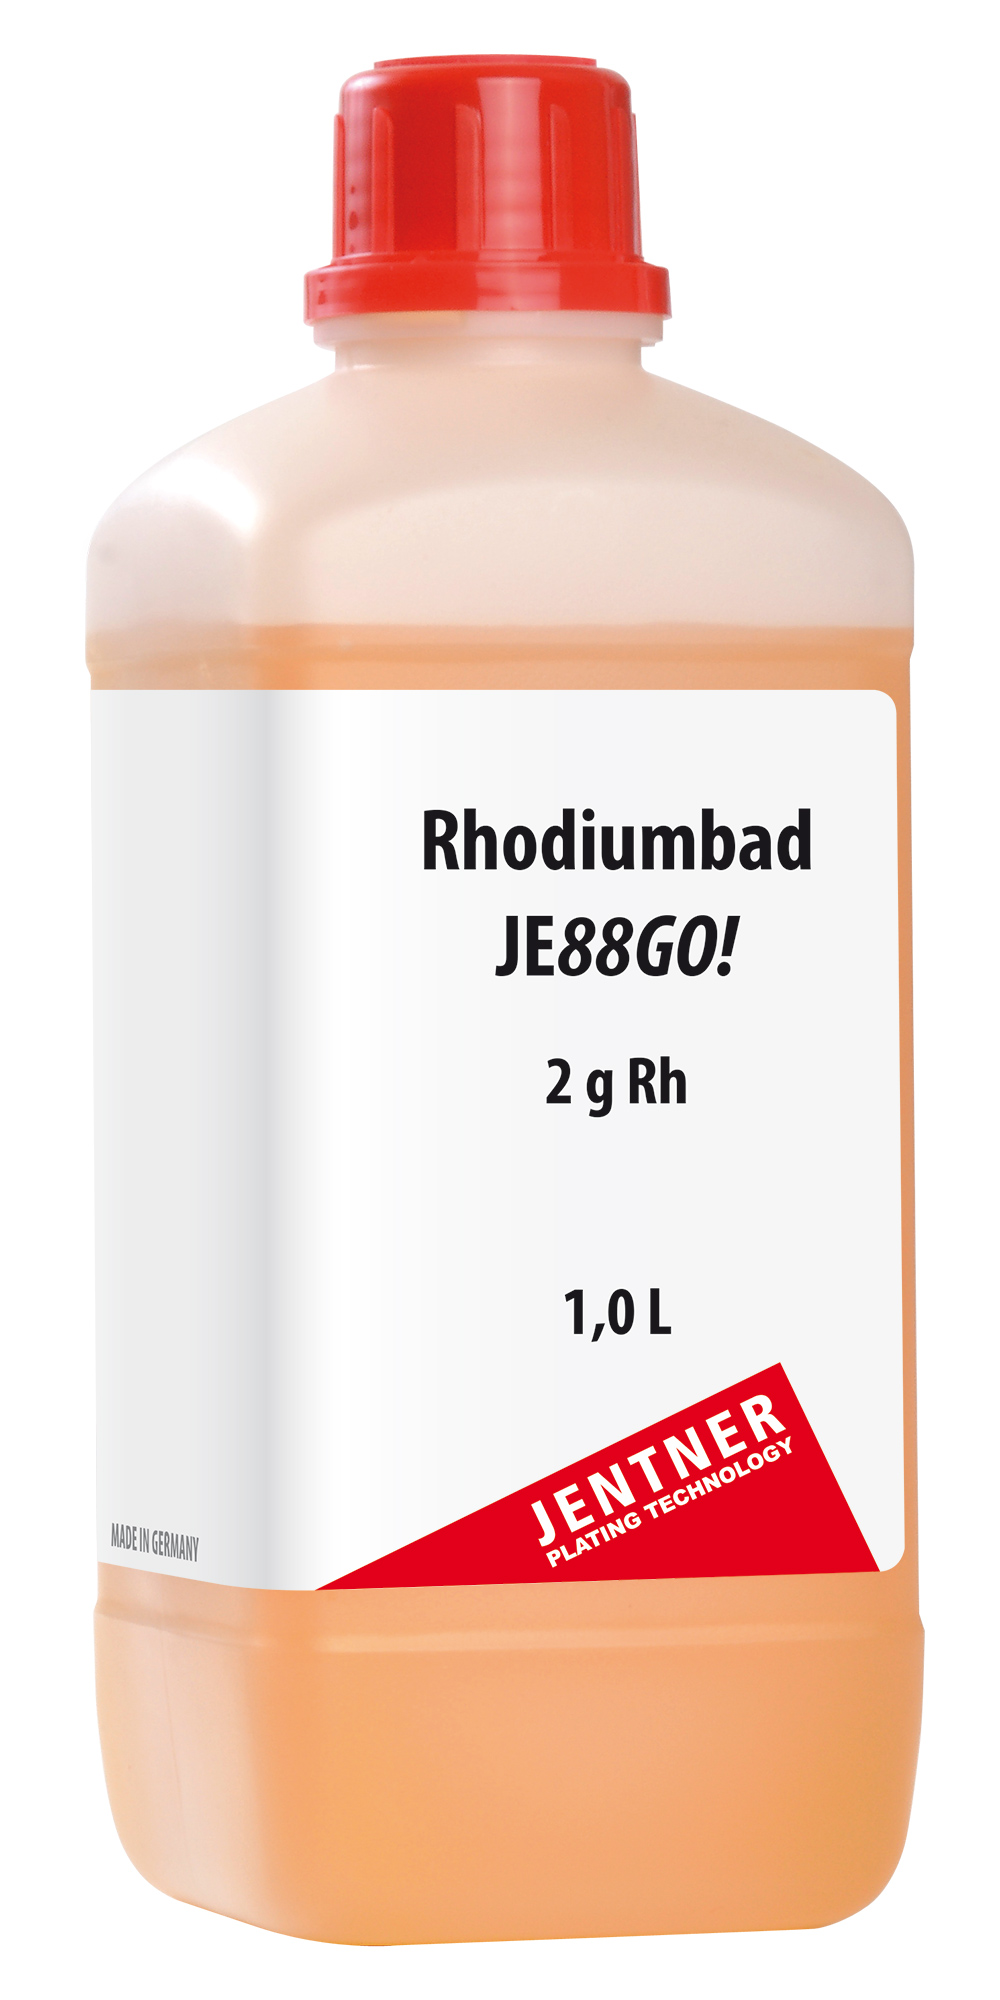 Rhodiumbad JE88 GO! - 2 g/L Rh